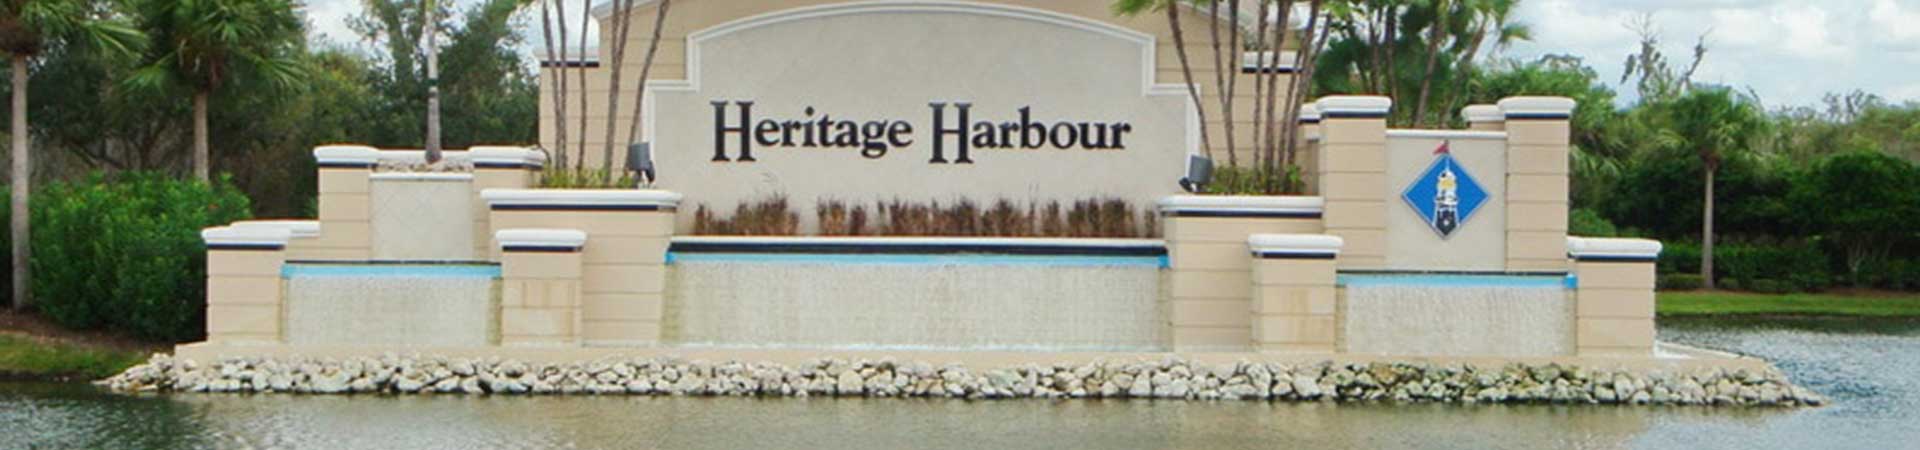 Heritage Harbour North